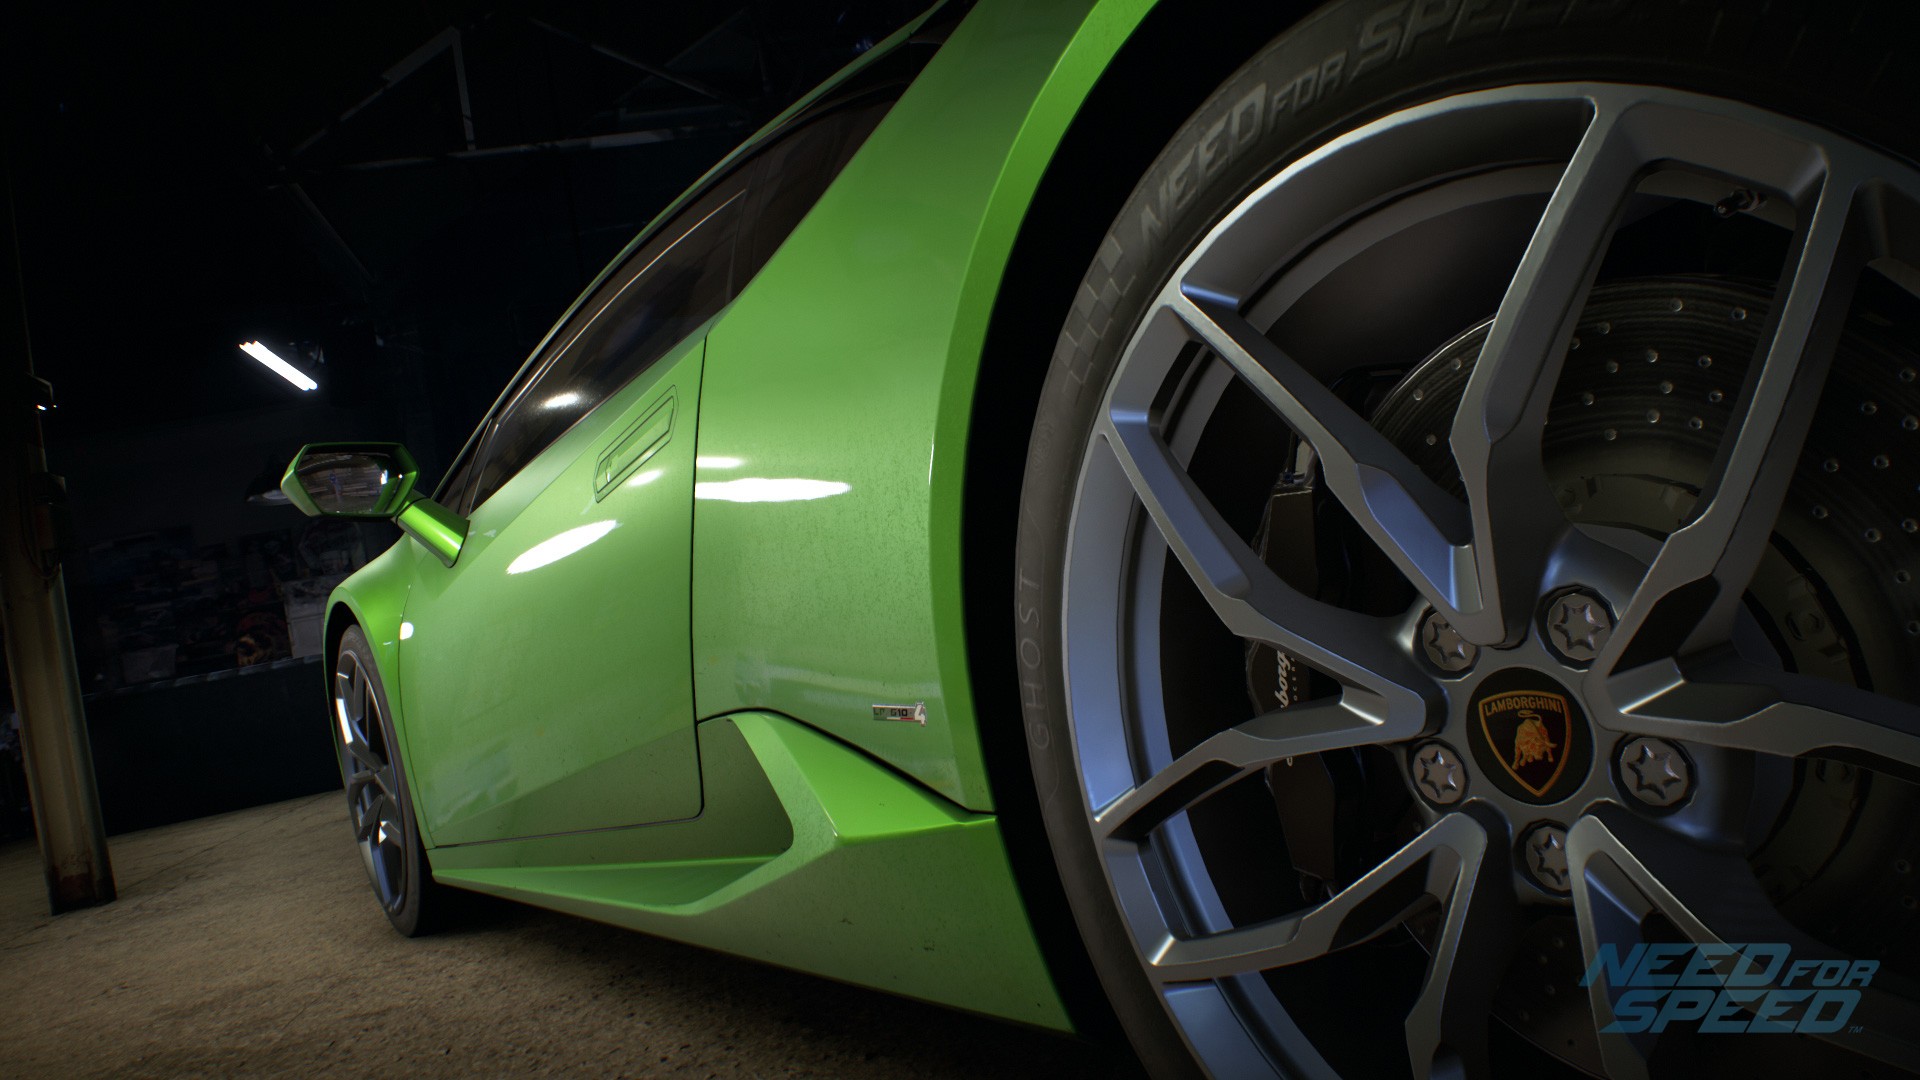 Need for Speed, Lamborghini, Car Wallpaper